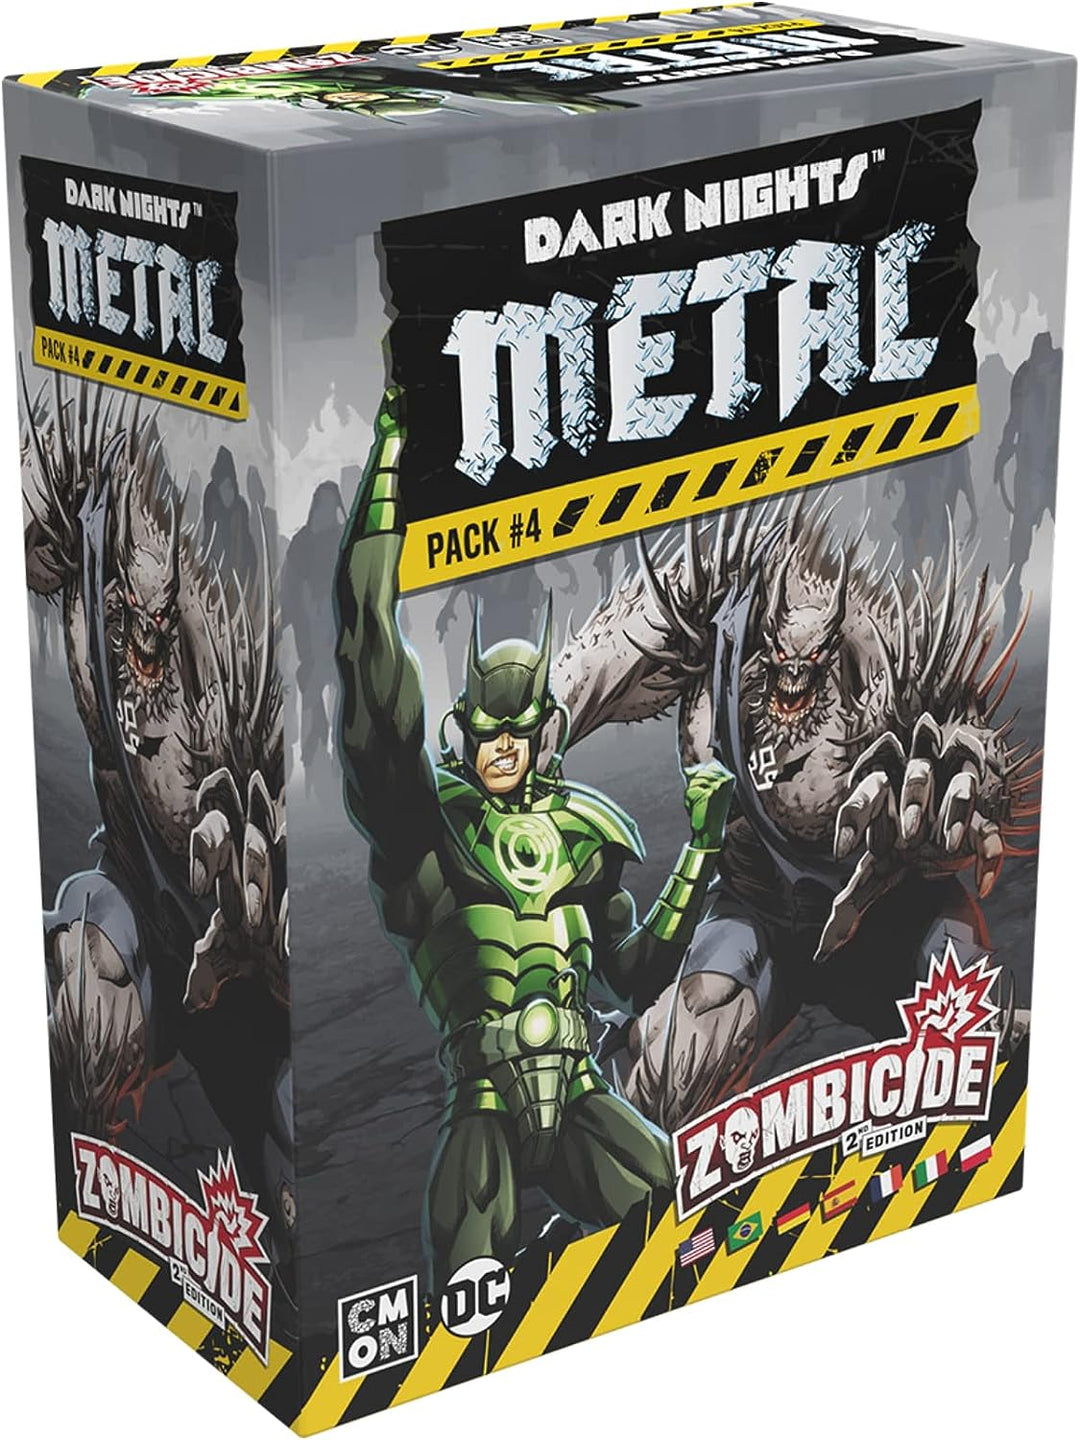 Zombicide 2. Edition: Dark Night Metal Promo Pack Nr. 4